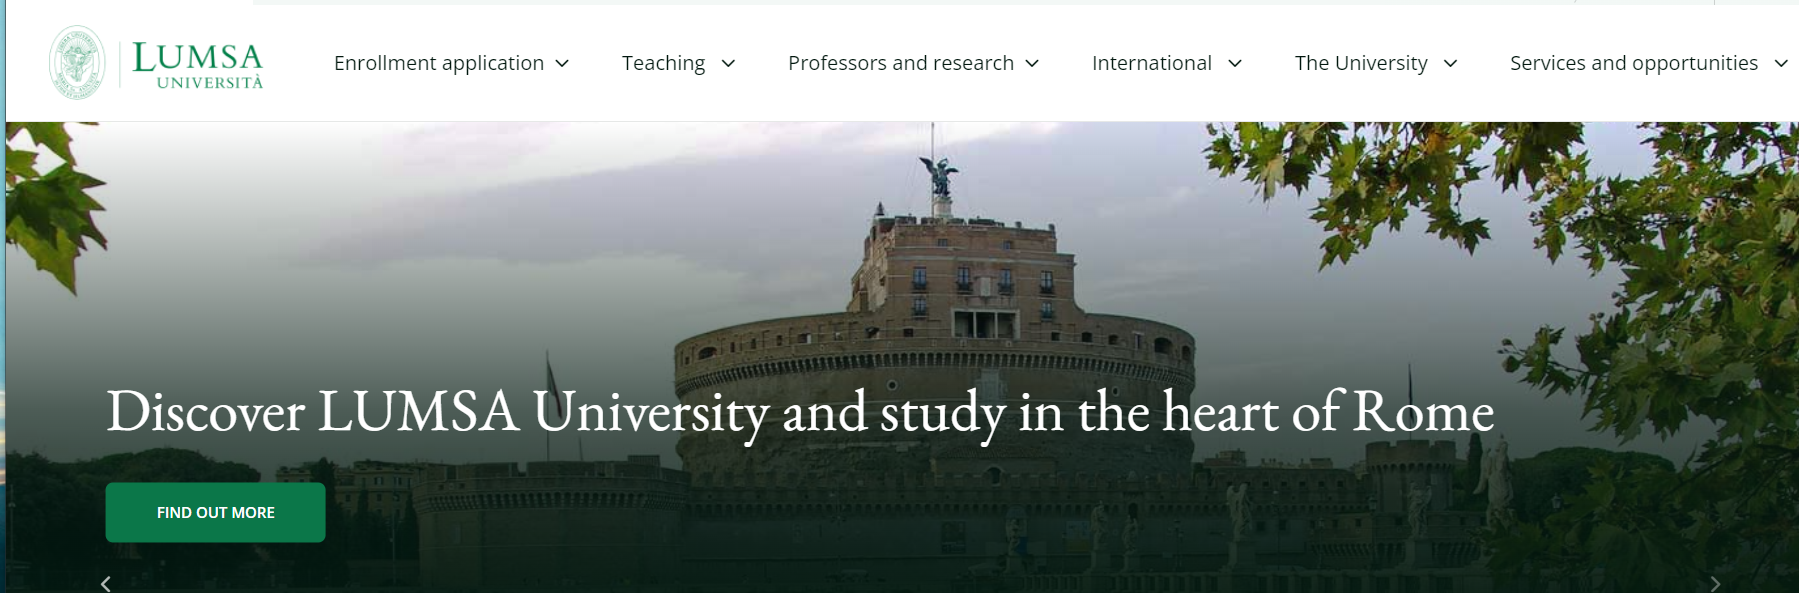 Lumsa Catholic university website